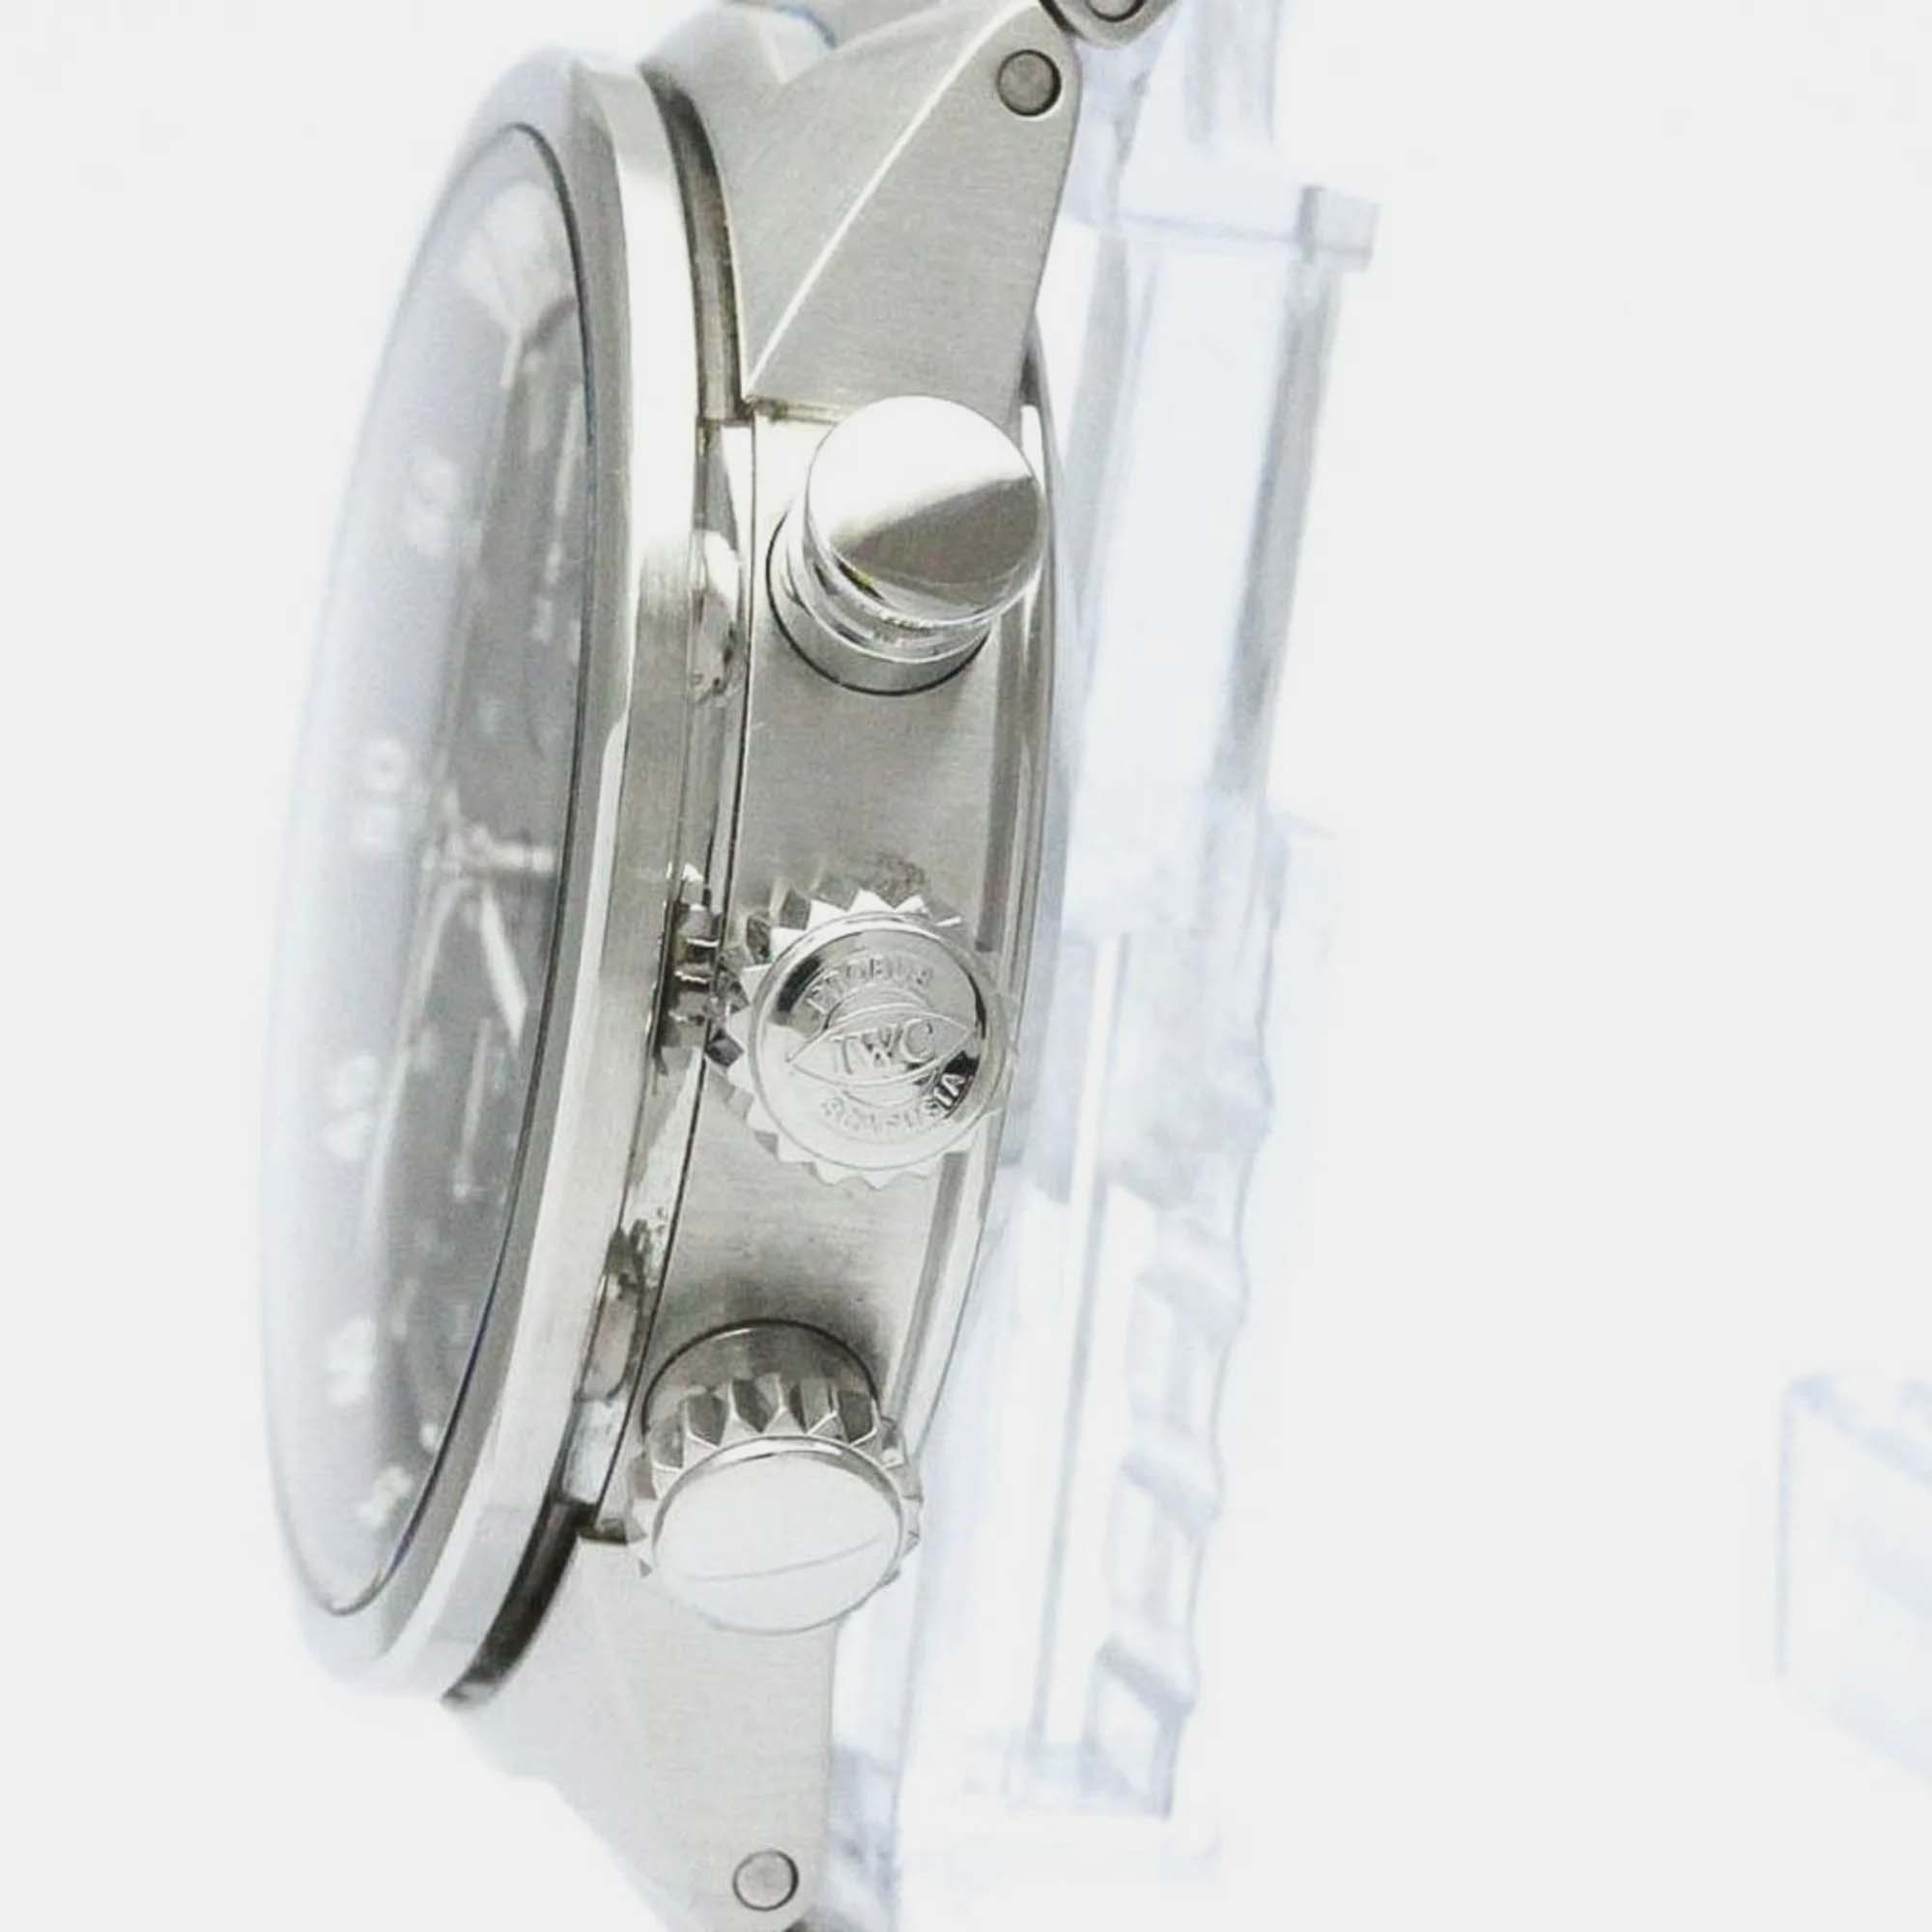 IWC Black Stainless Steel Aquatimer IW371928 Automatic Men's Wristwatch 42 Mm